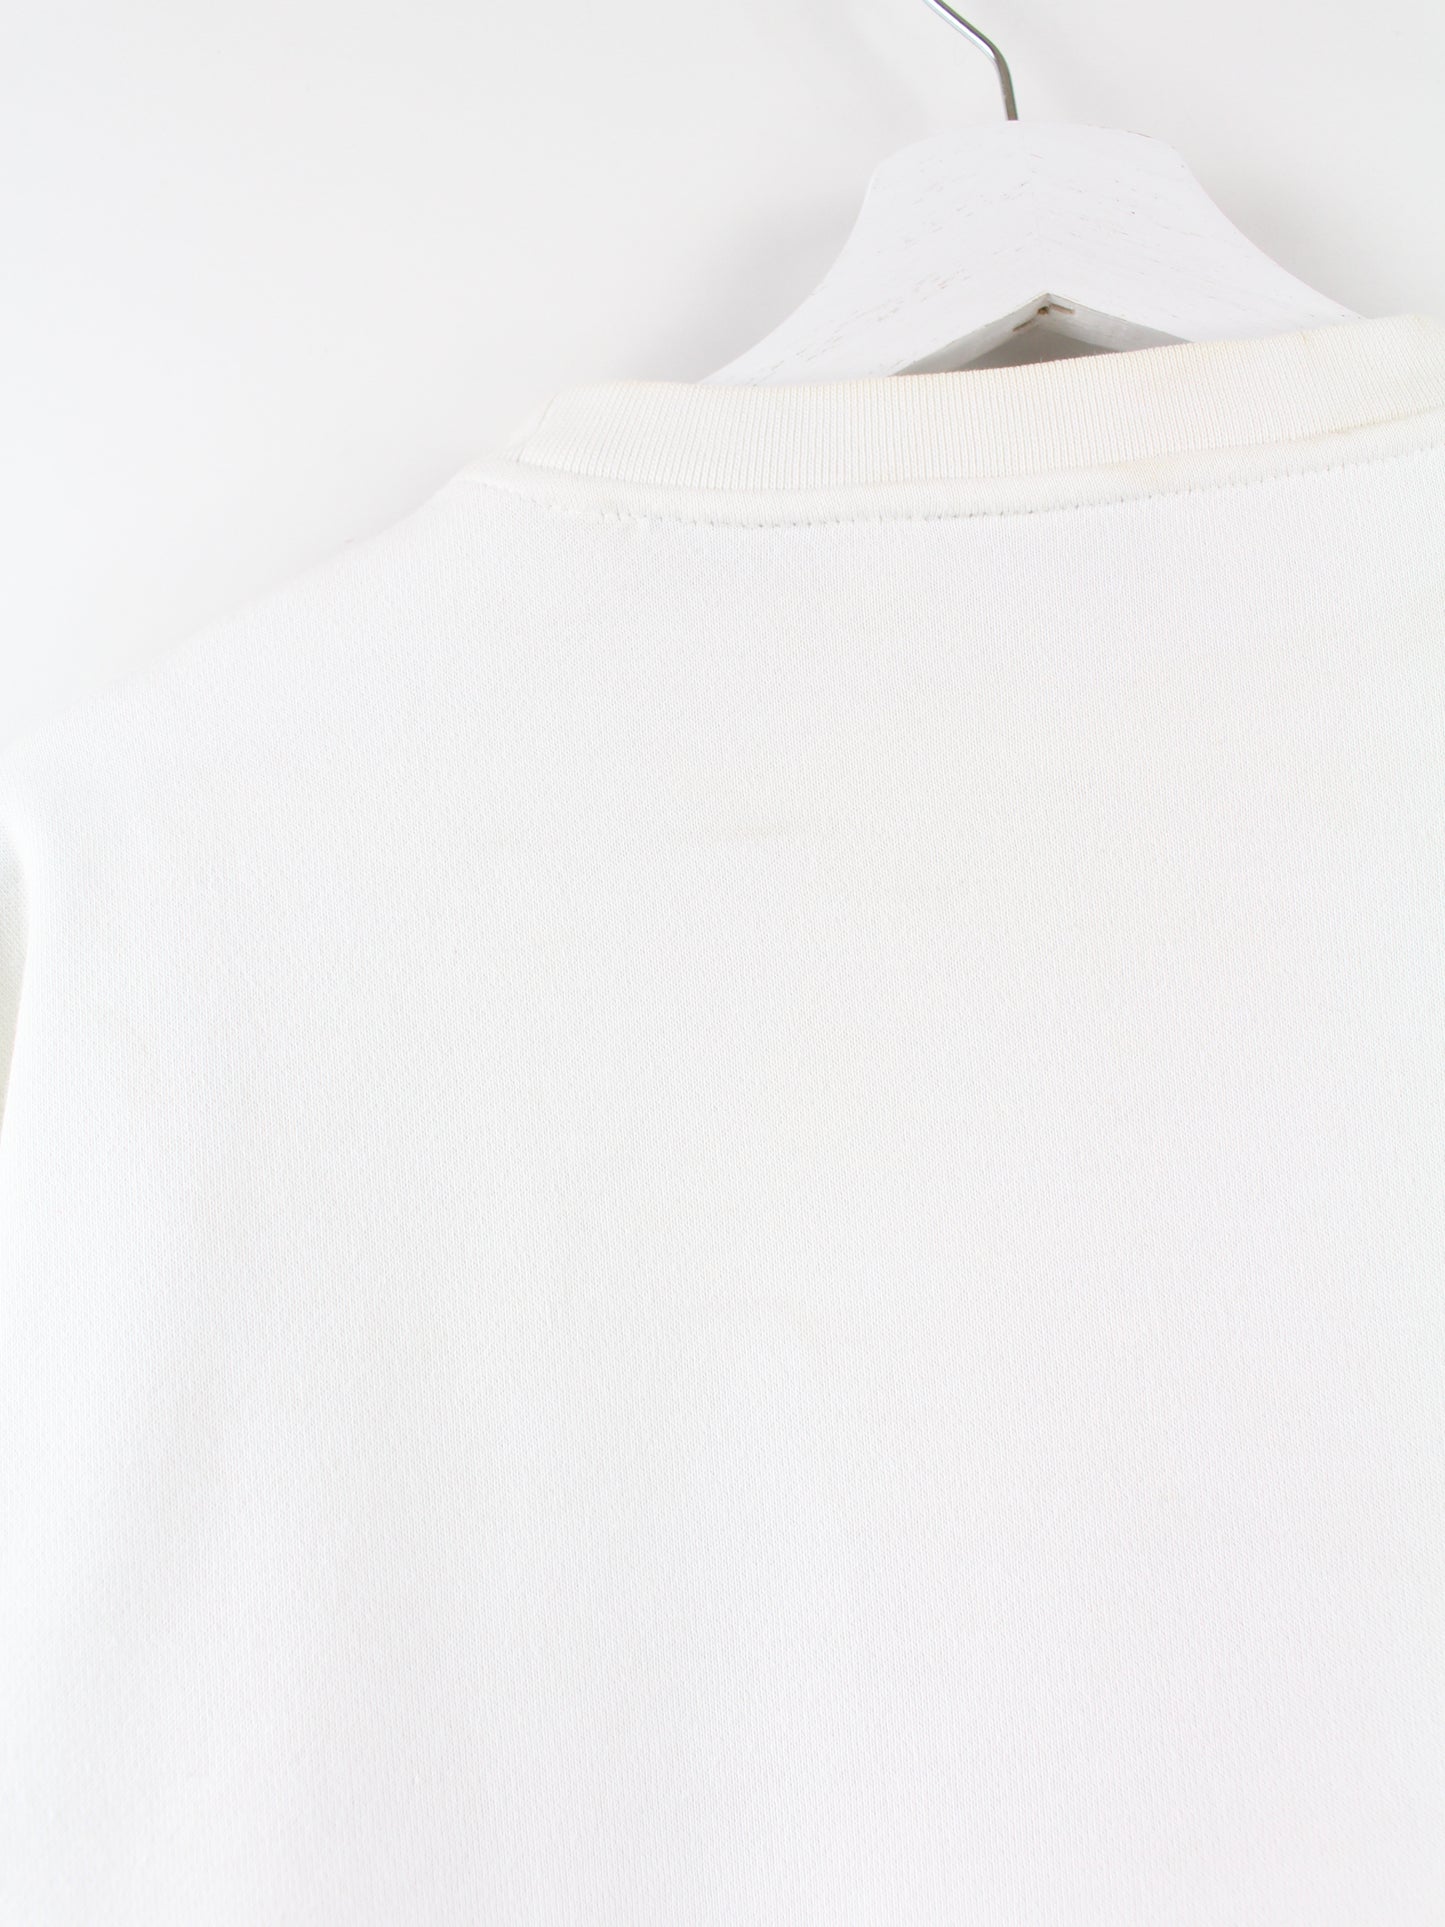 Fila Embroidered Sweater Weiß M